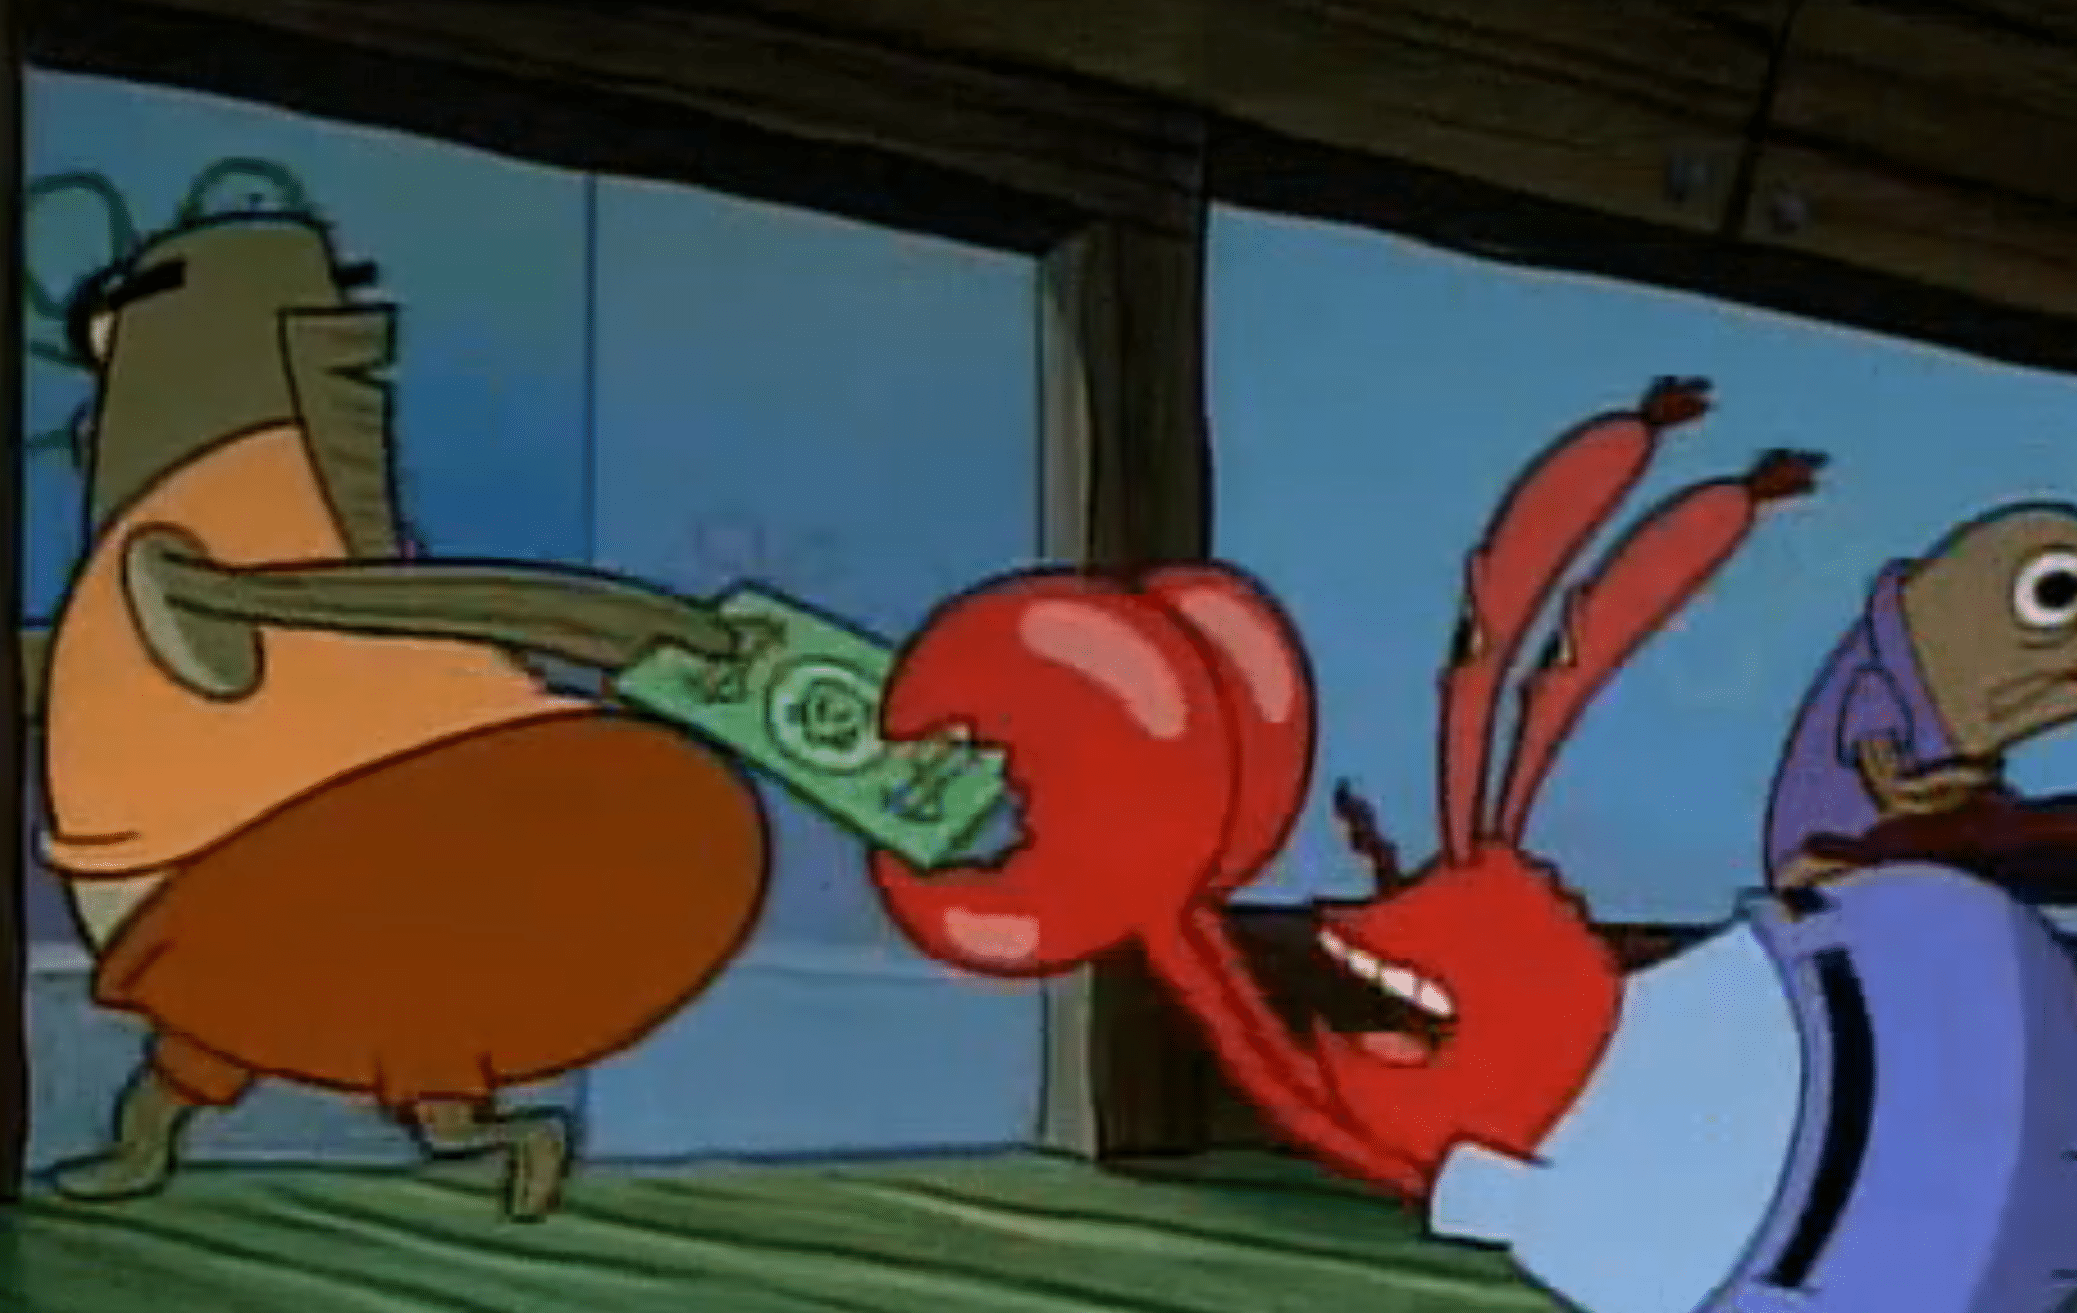 Meme Generator - Mr. Krabs holding onto dollar, getting dragged - Newfa